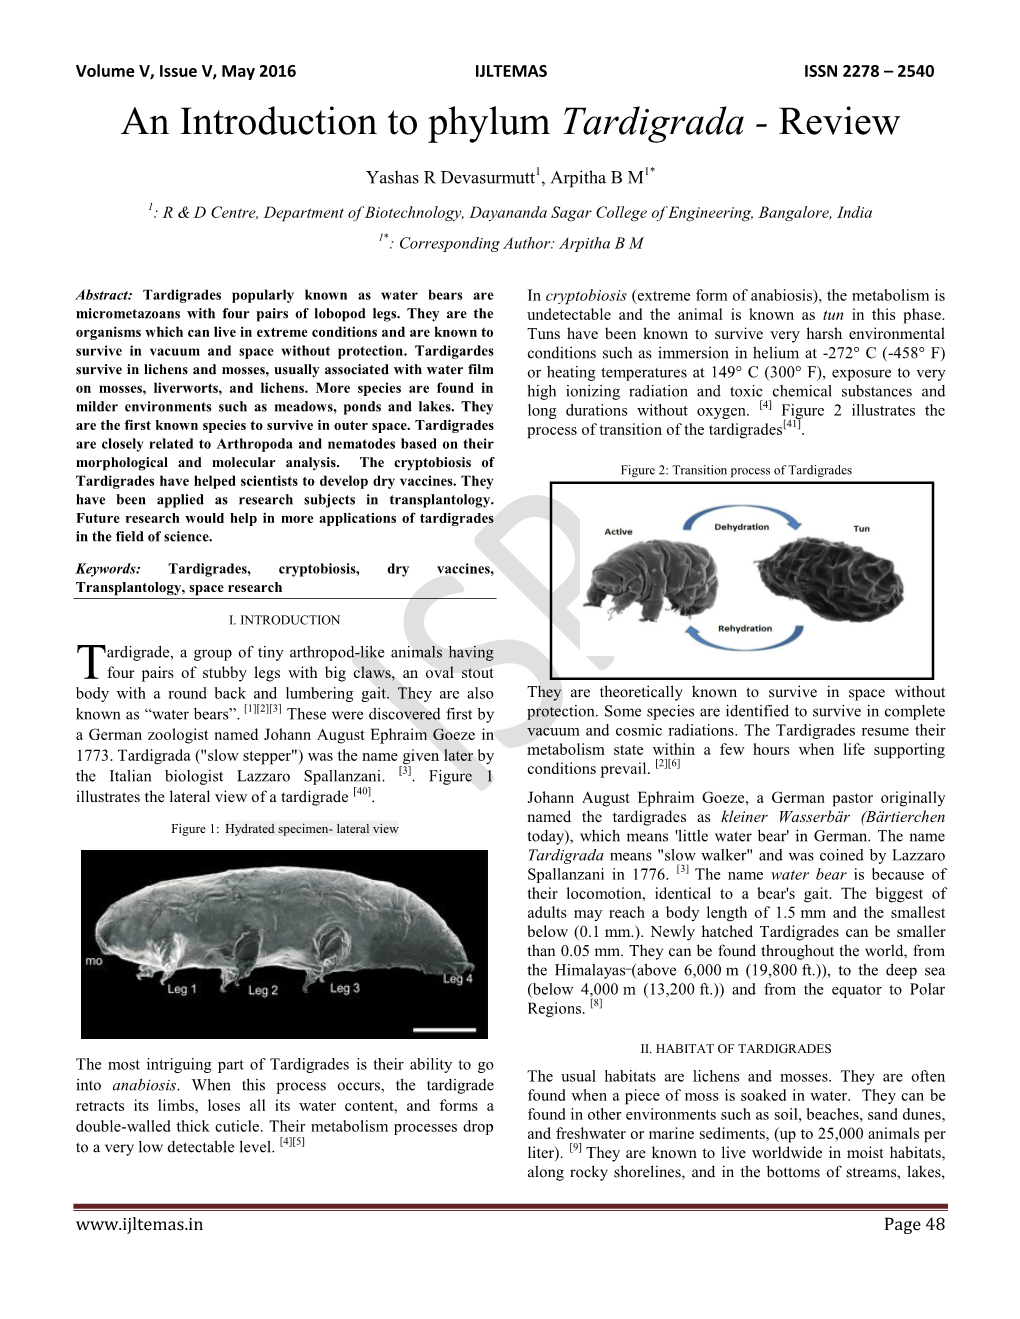 An Introduction to Phylum Tardigrada - Review